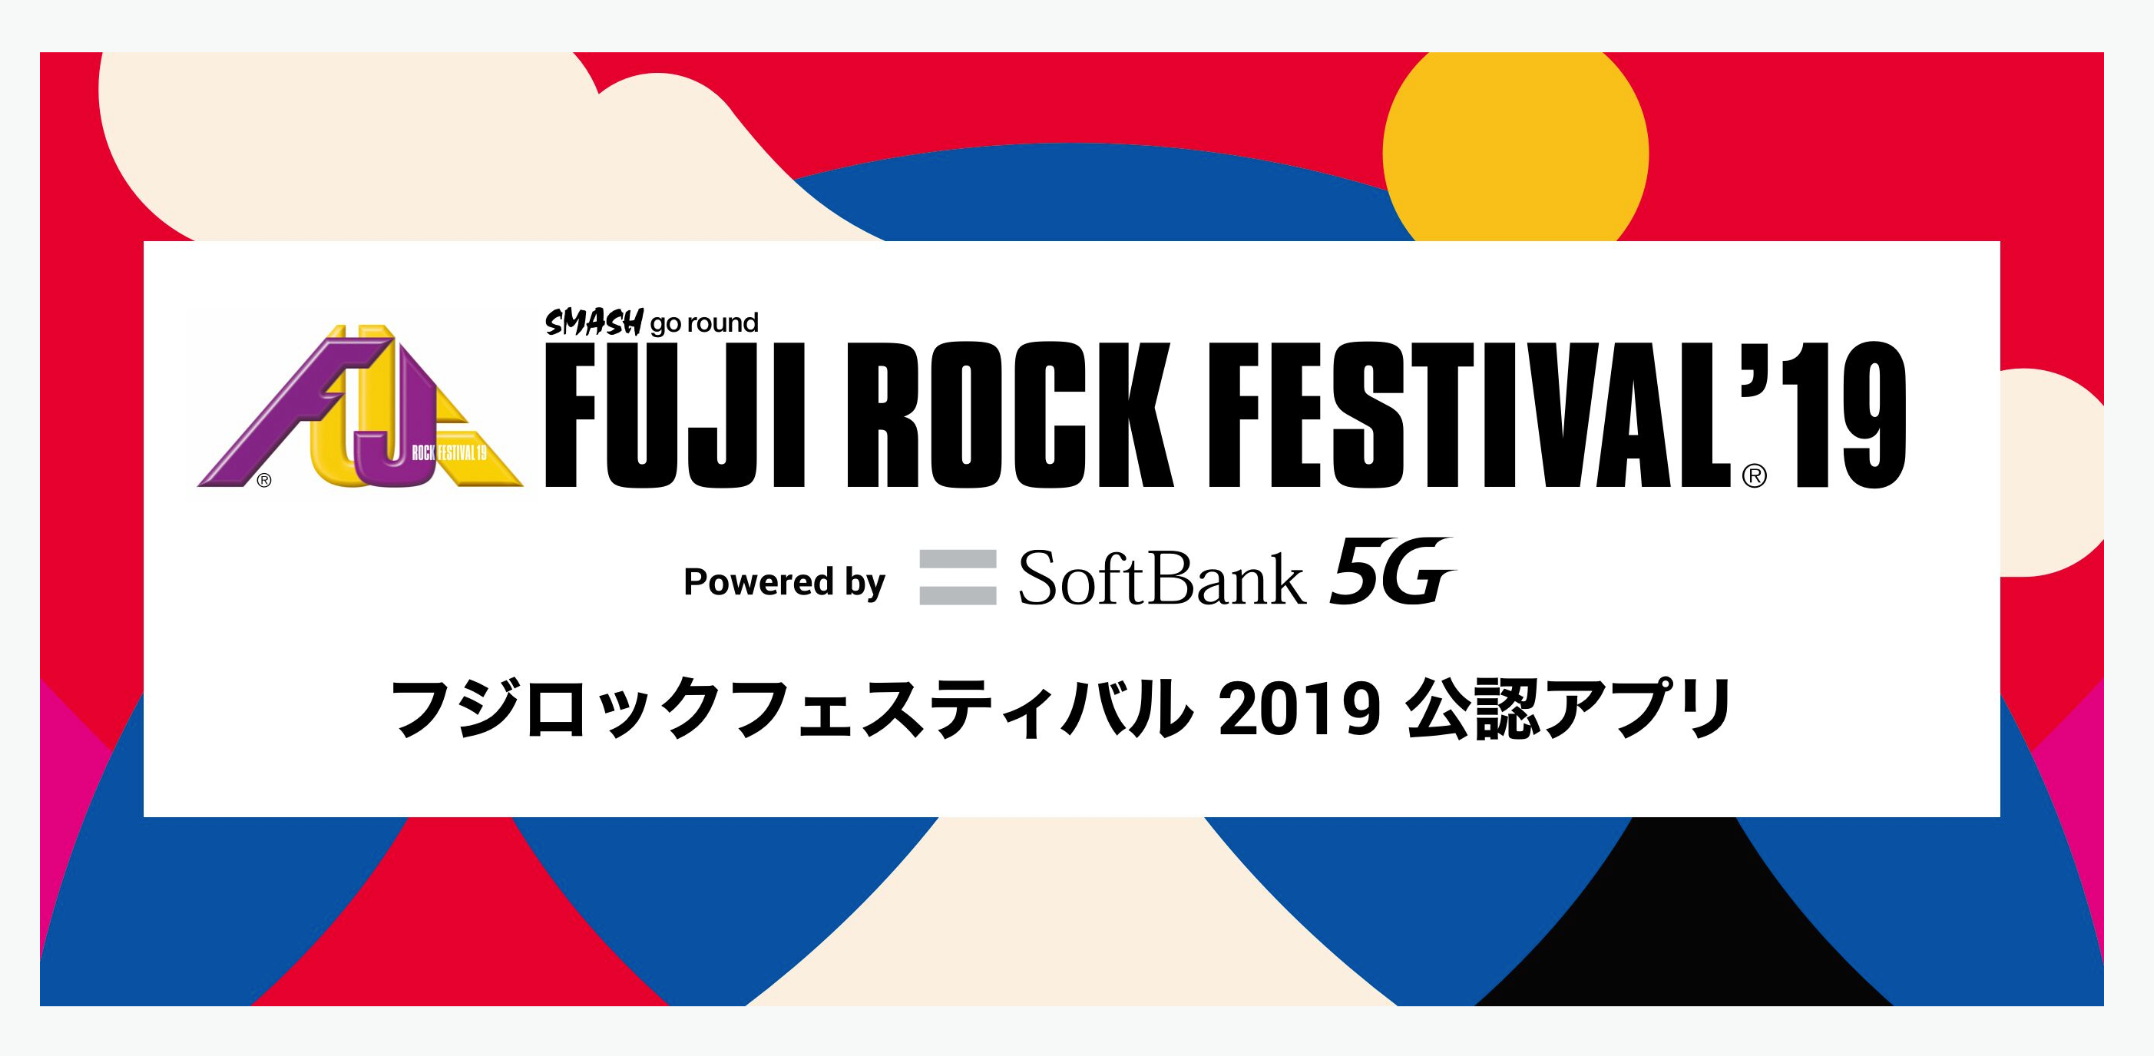 Softbank Fuji Rock Festival 19 日本初 音楽フェスでの5gプレサービス決定 フジロック公認アプリ Fuji Rock 19 By Softbank 5g ローンチ ソフトバンク株式会社のプレスリリース